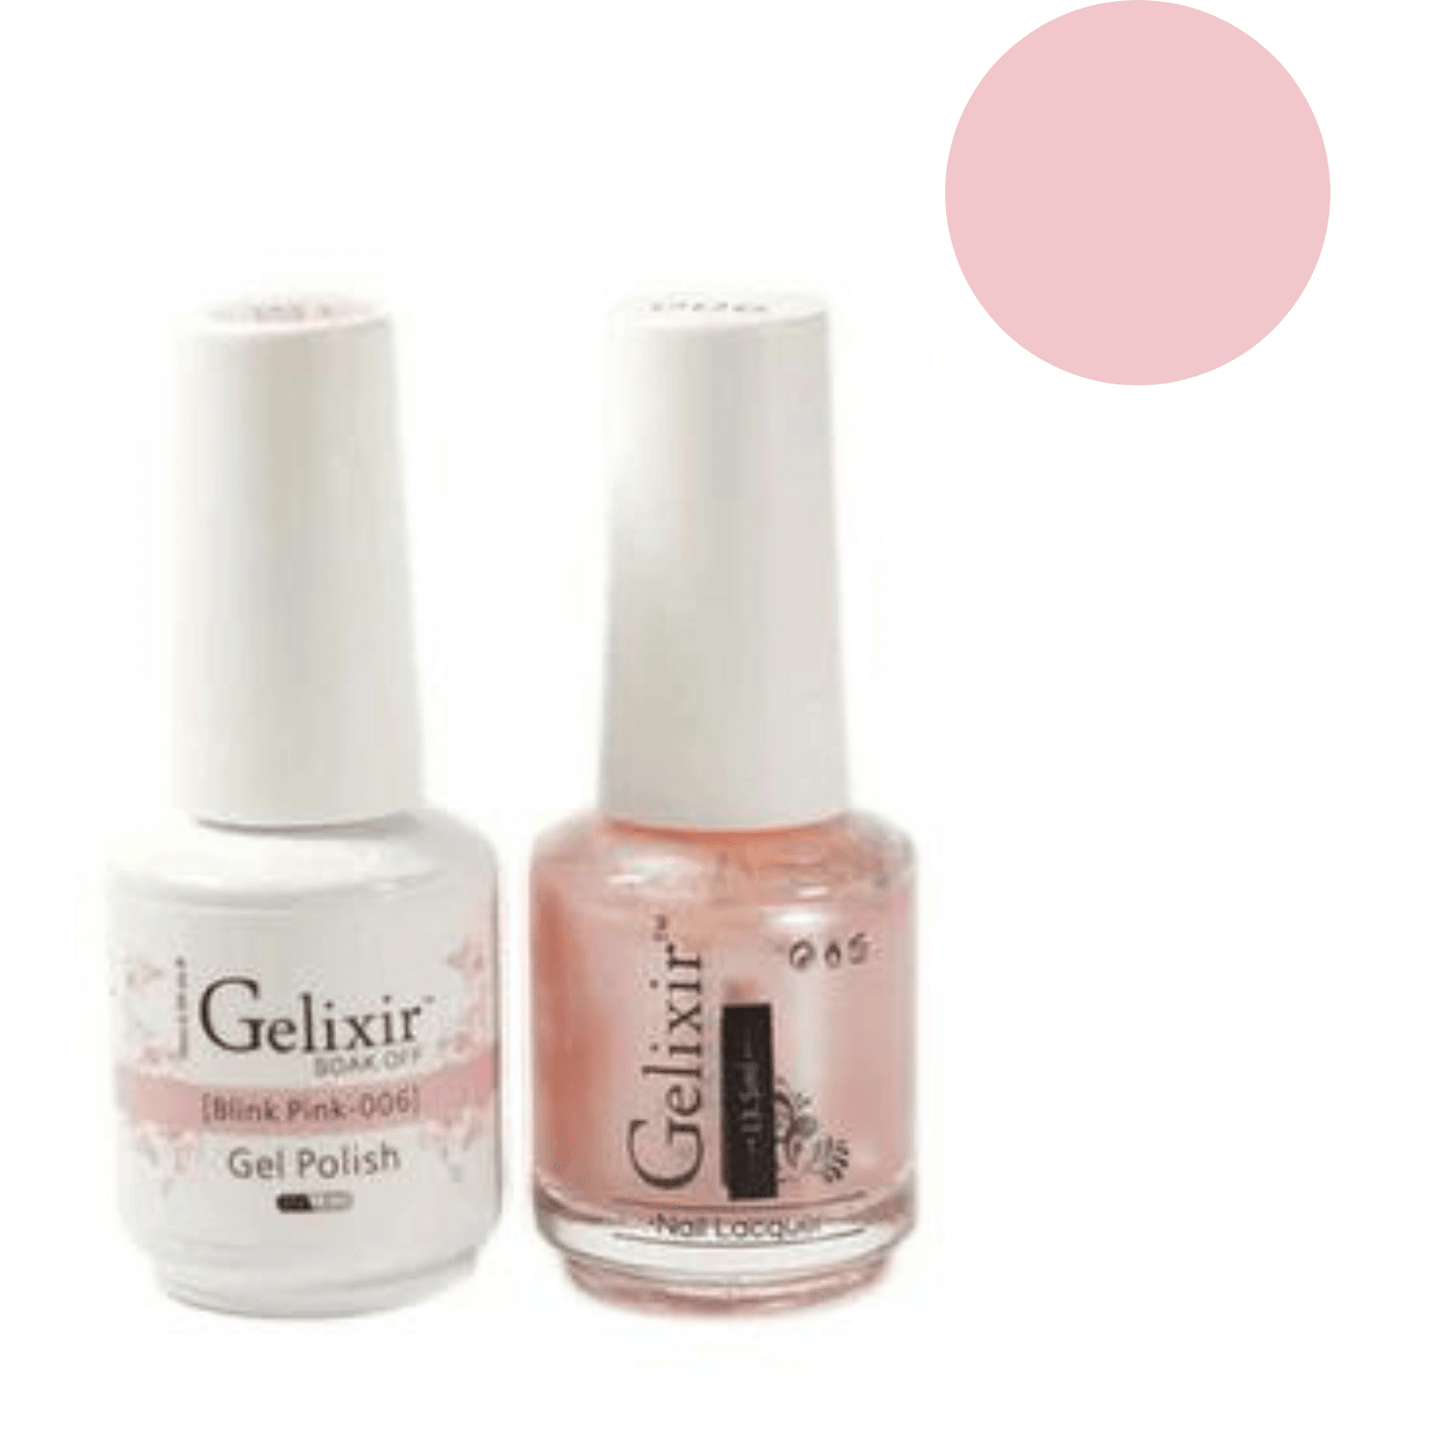 Gelixir Gel Polish & Nail Lacquer Duo - Blink Pink 006 - Premier Nail Supply 